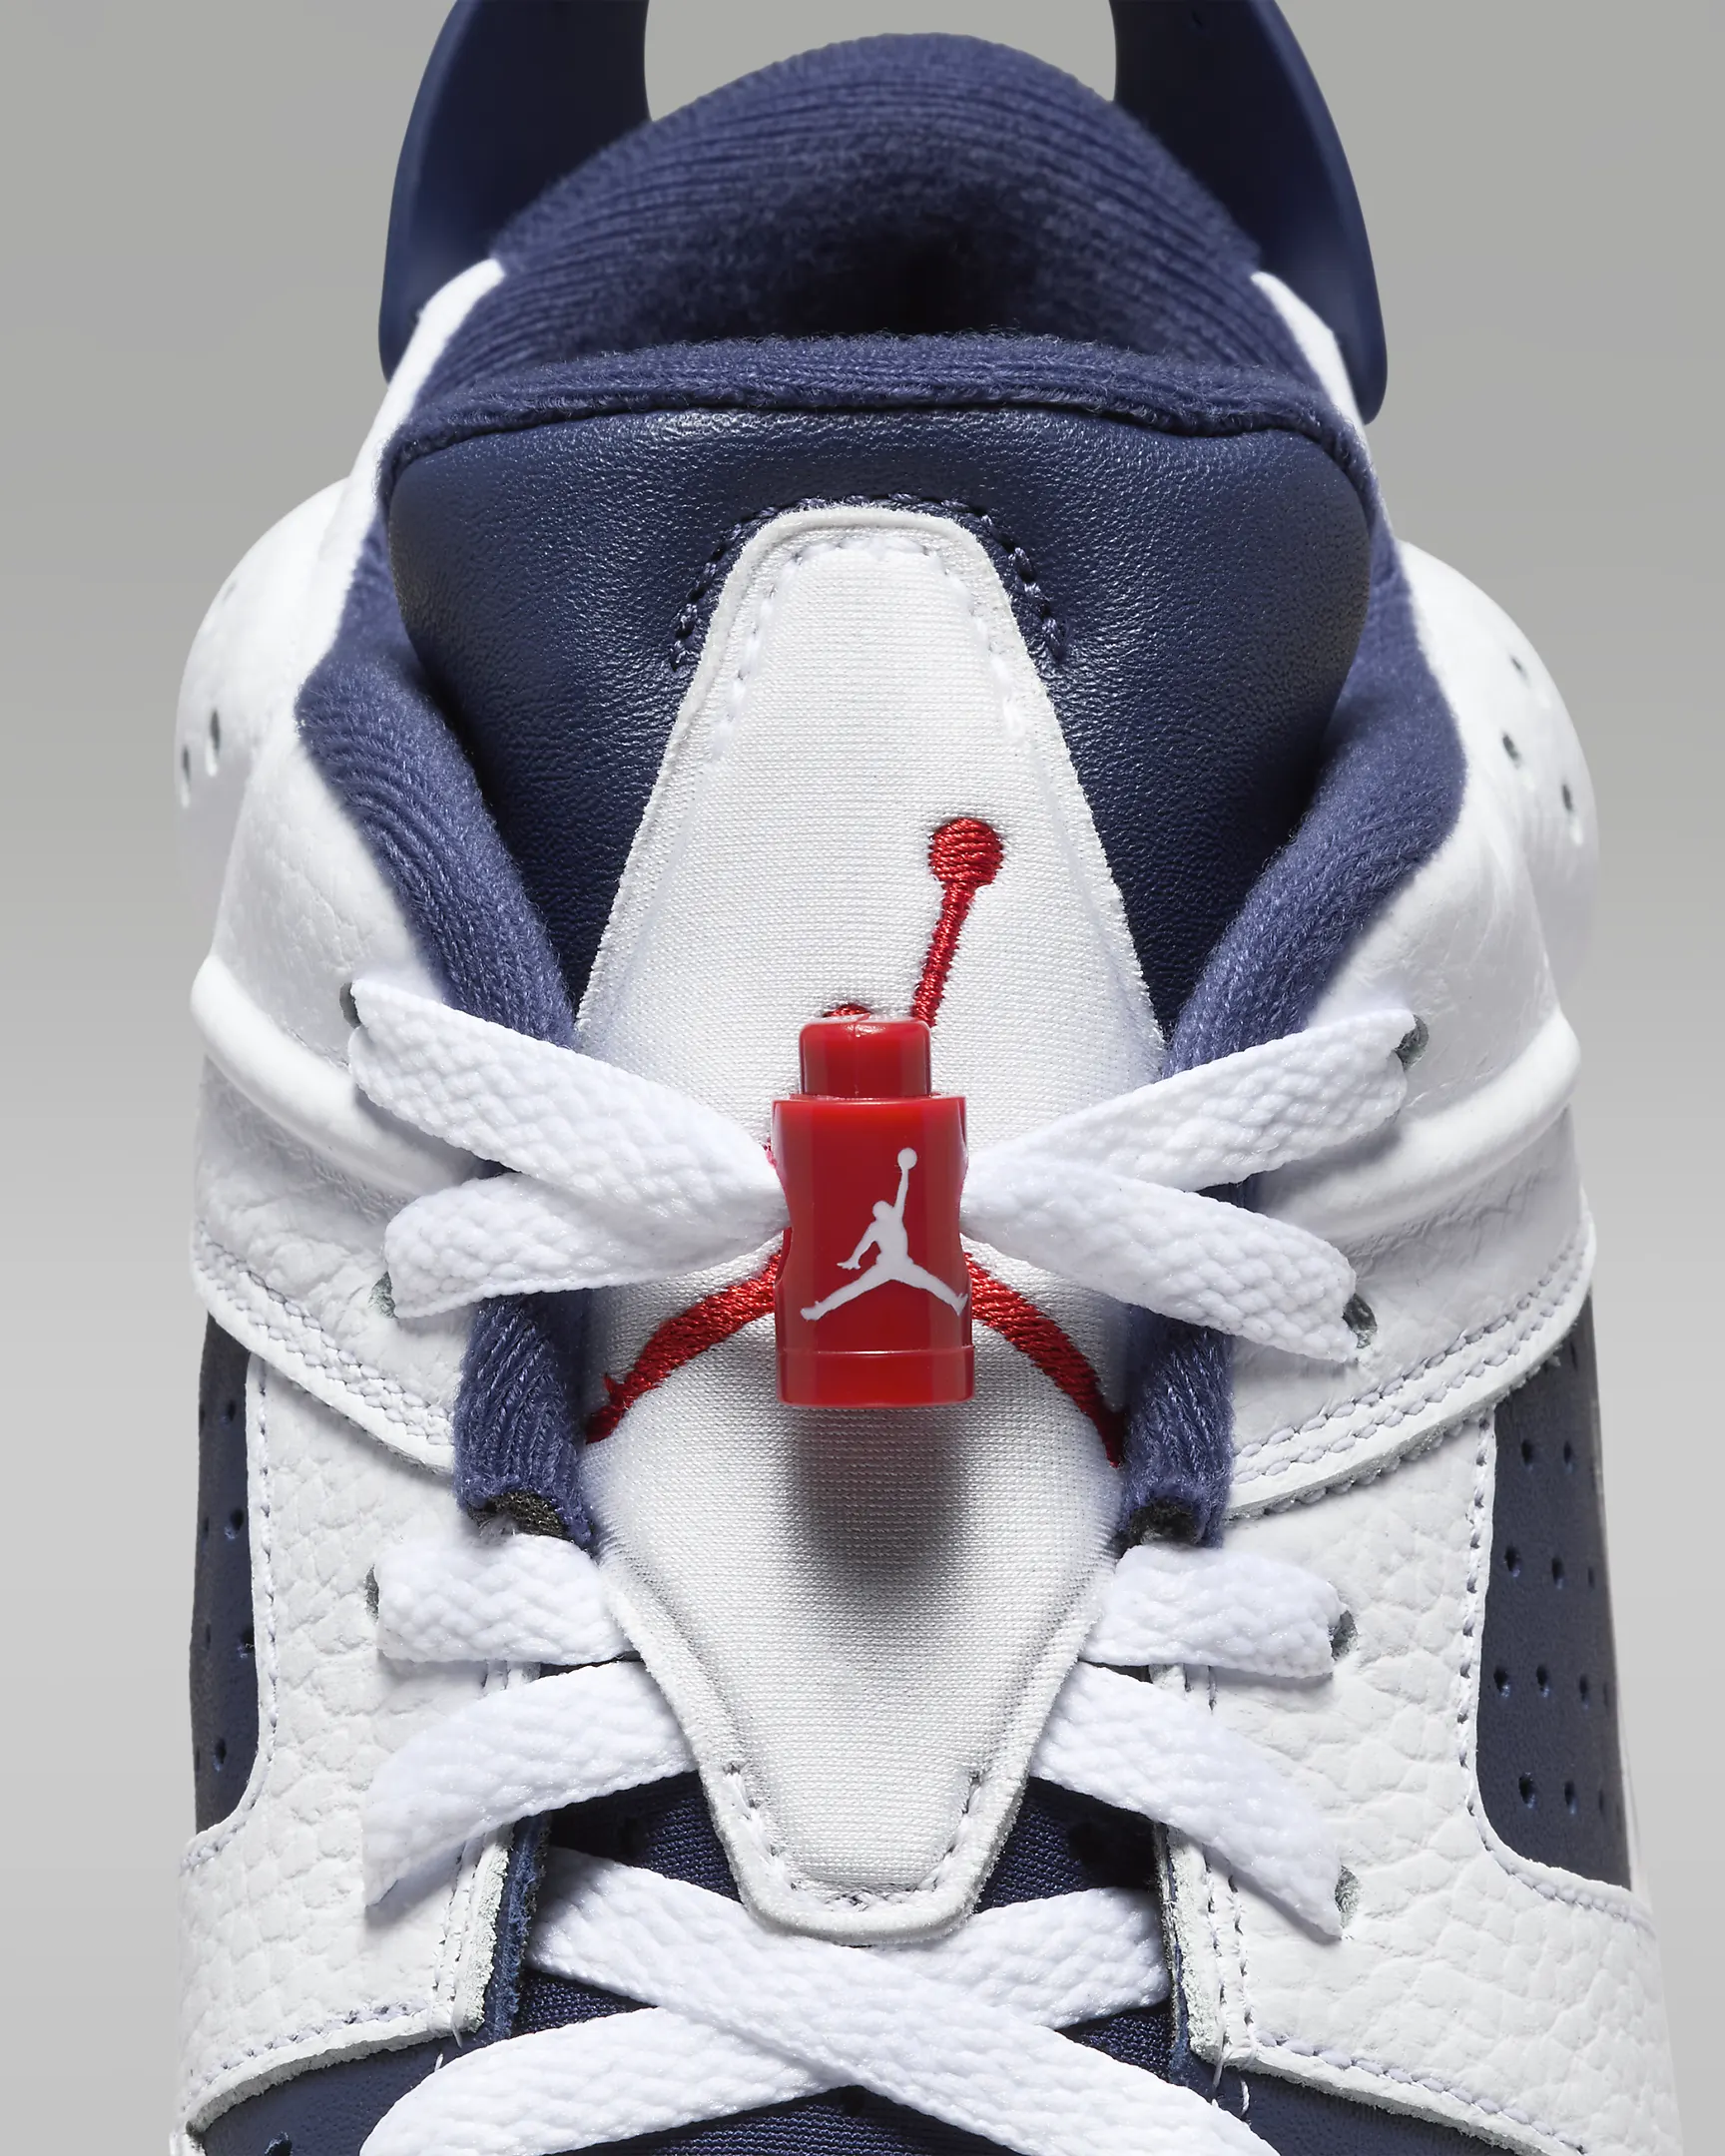 Nike Jordan Retro 6 G